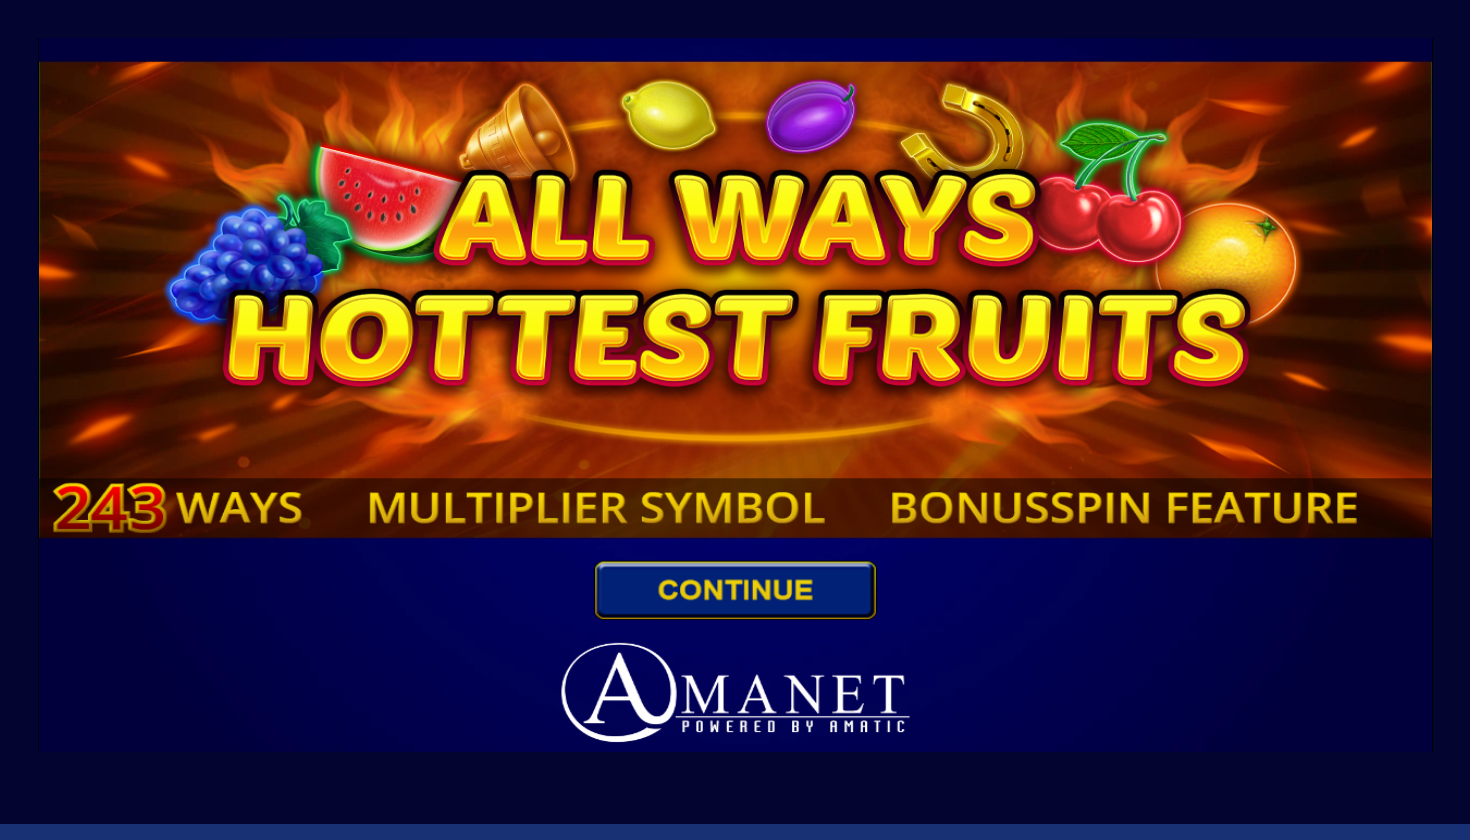 All Ways Hottest Fruits tragamonedas inicio.png